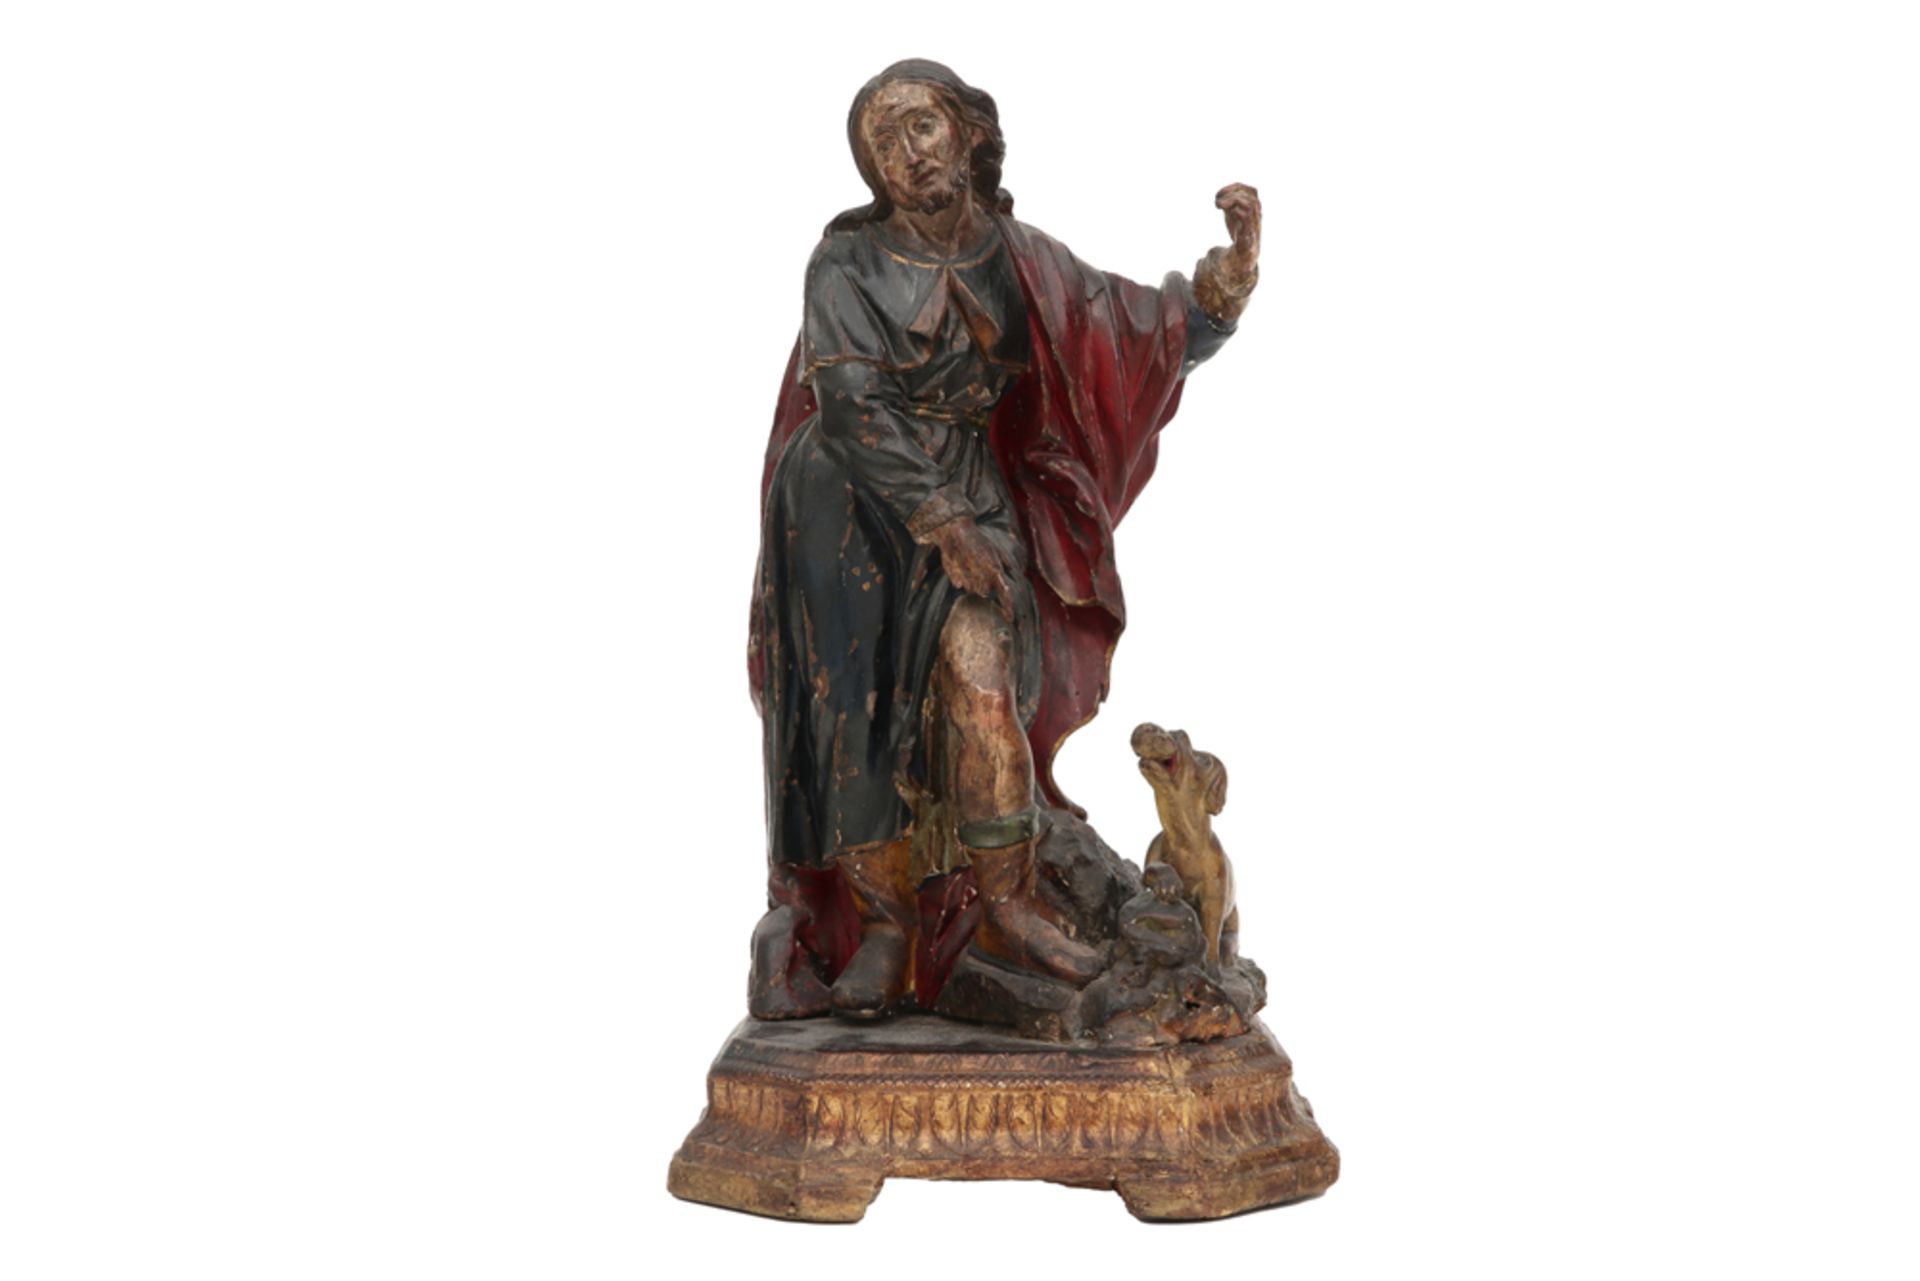 17th/18th Cent. sculpture in wood with original polychromy || Zeventiende/achttiende eeuwse